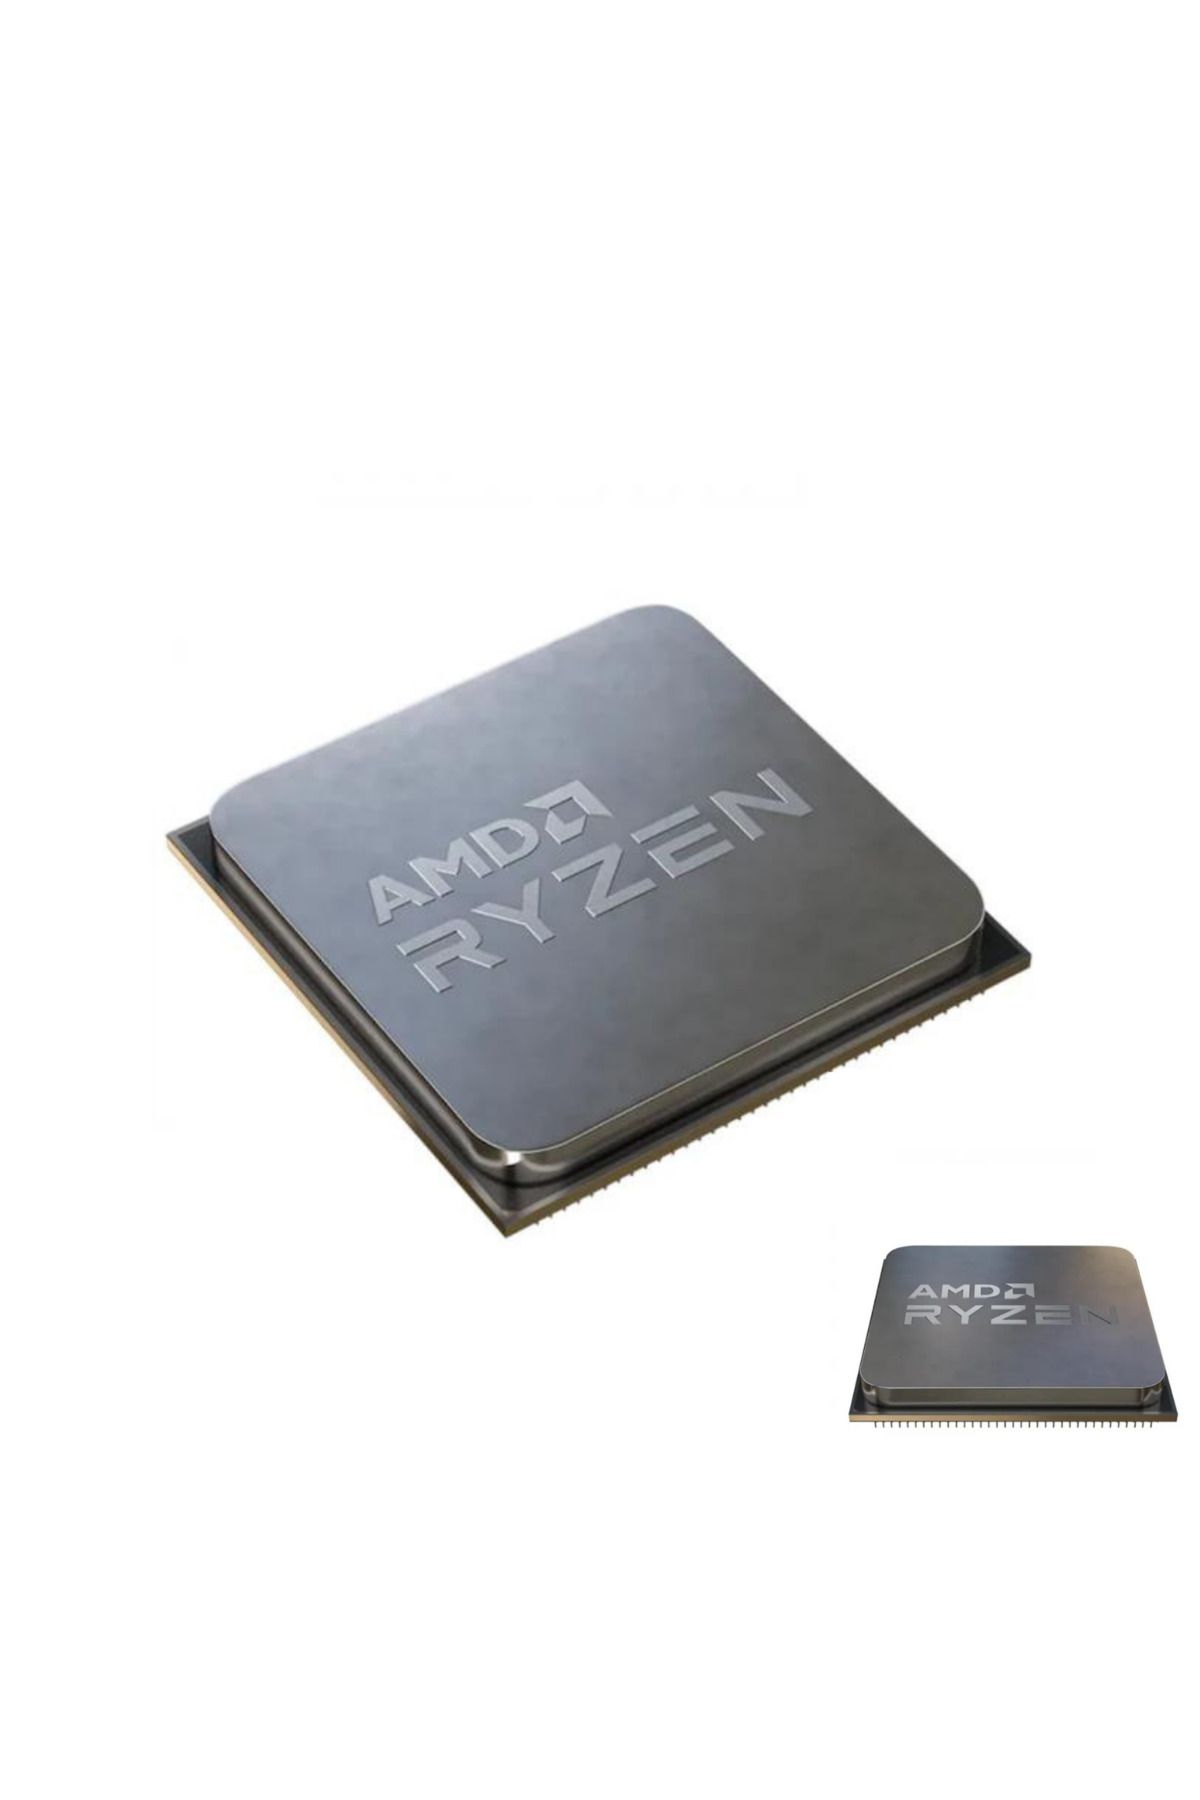 Amd Ryzen™ 5 5600 3.5GHz (Turbo 4.4GHz) 6 Core 12 Threads 35MB Cache AM4 İşlemci - Tray